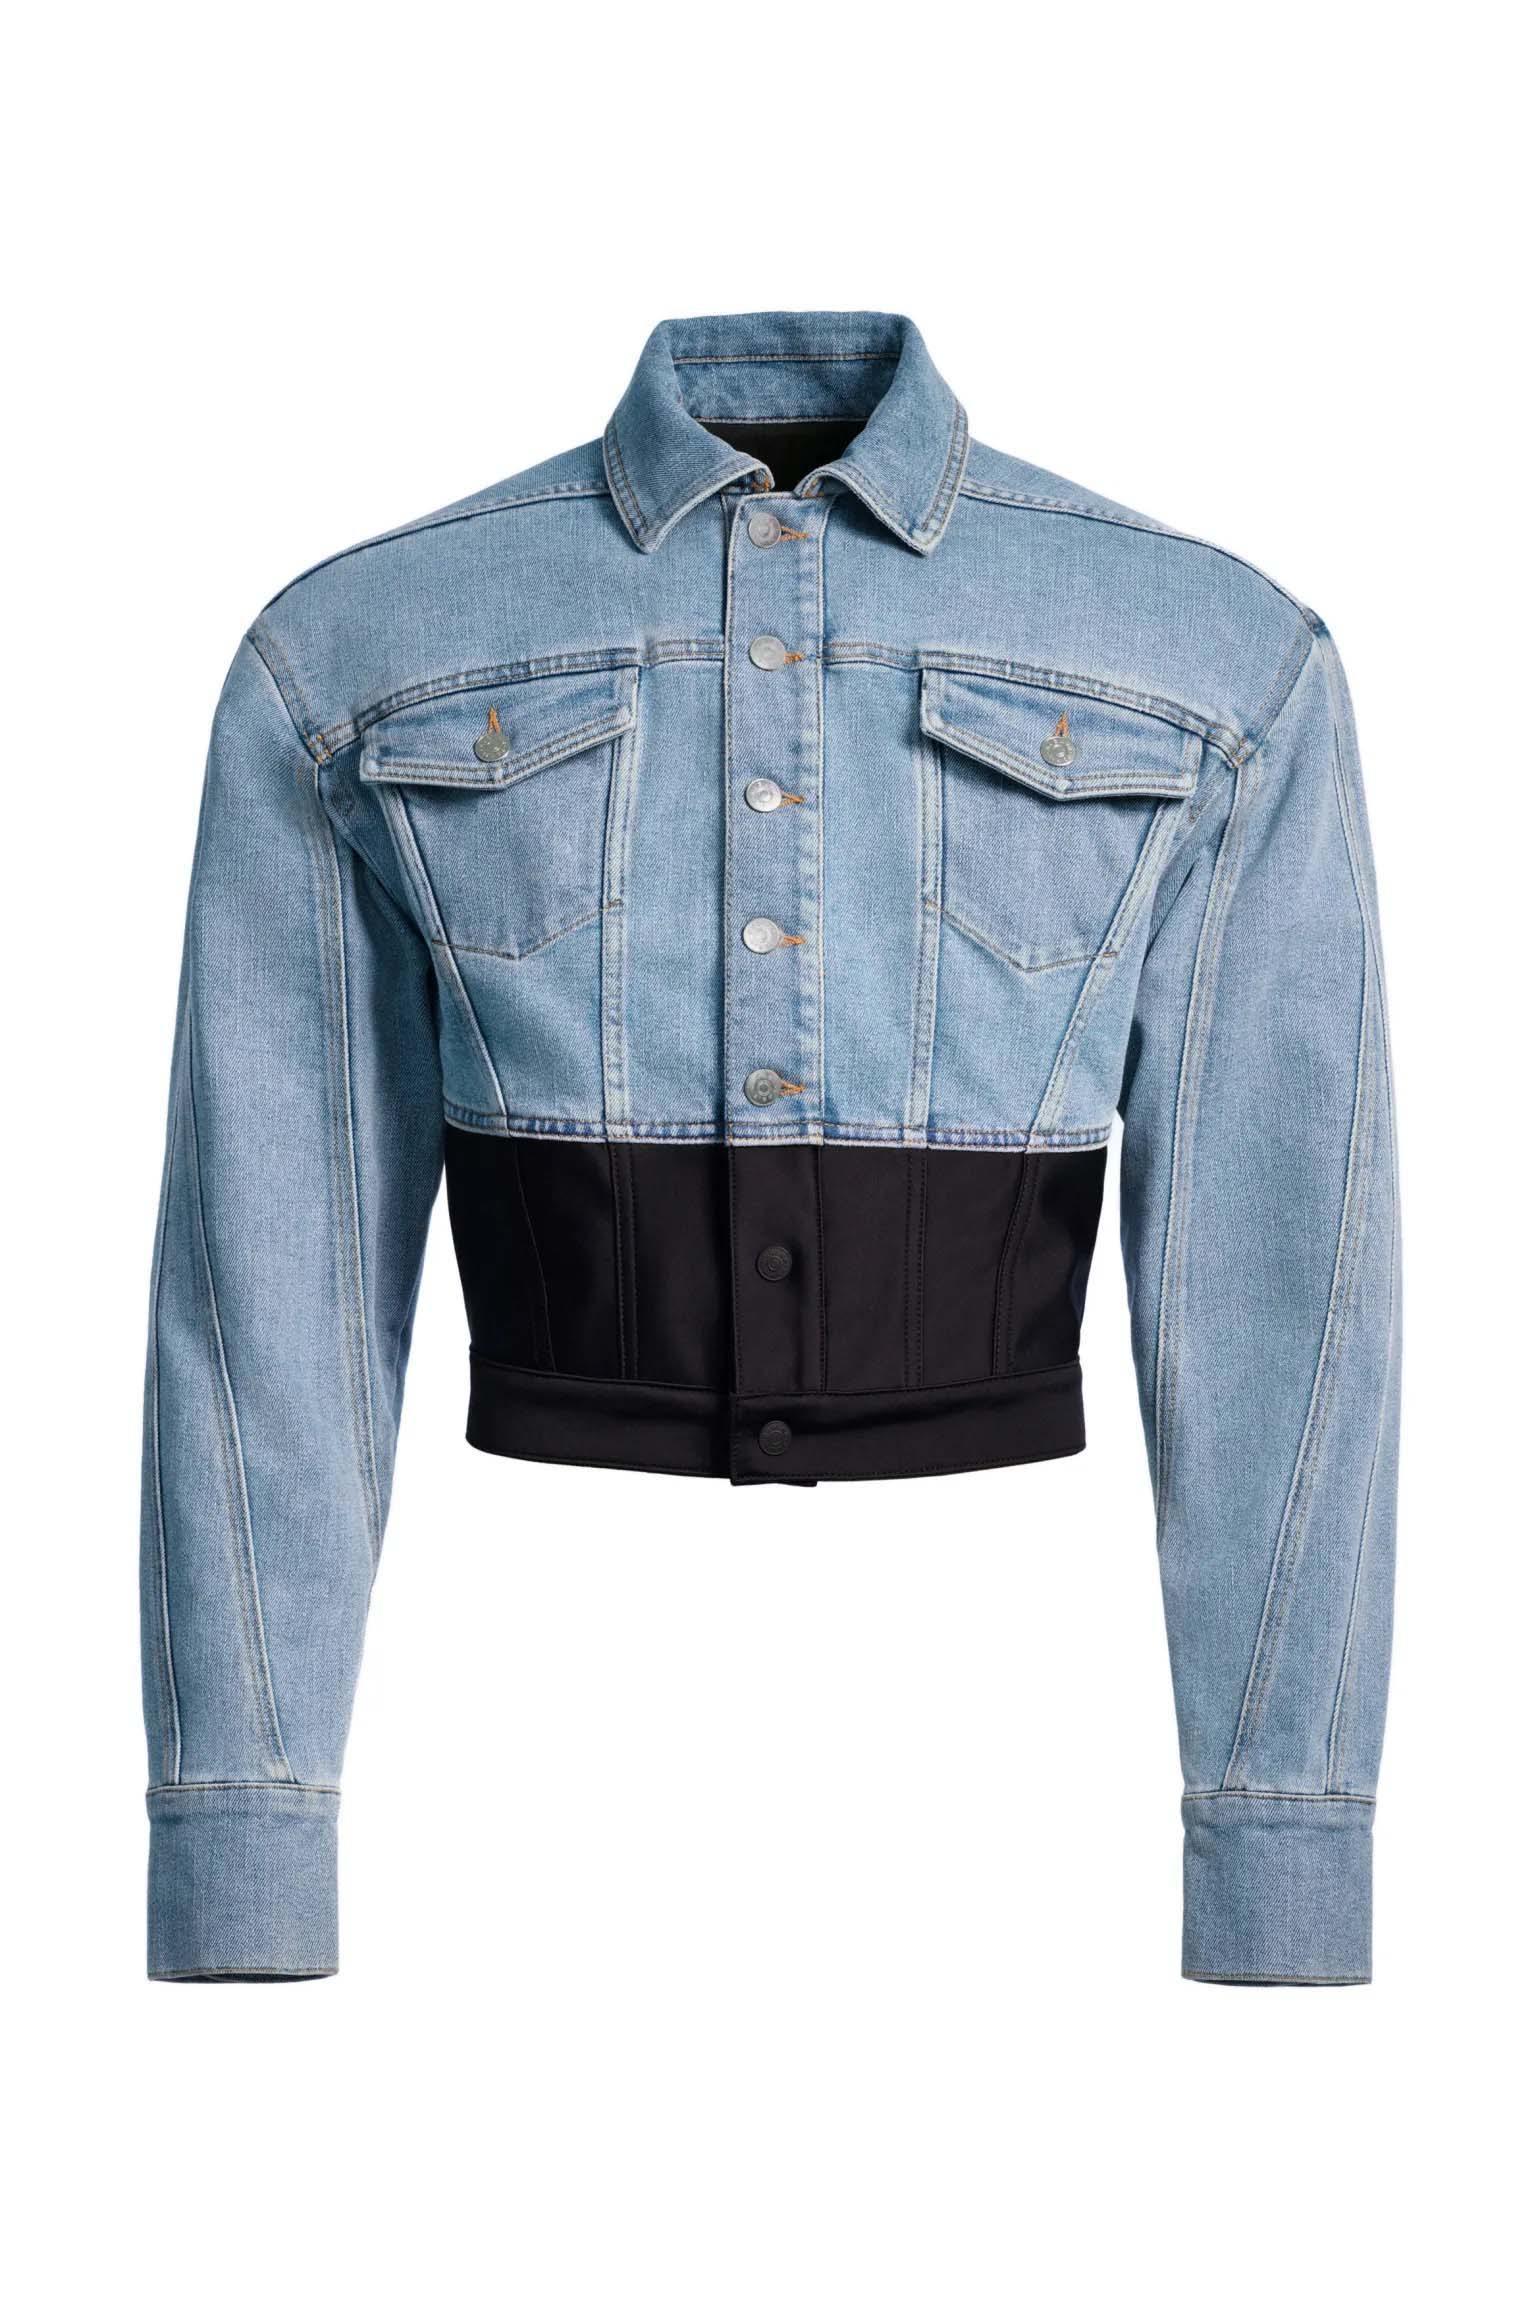 Buy HANGON Men Jacket and Coat Trendy Warm Fleece Thick Denim Jacket Winter  Fashion Mens Jean Jacket Outwear Male Cowboy Plus Size 4XL at Amazon.in